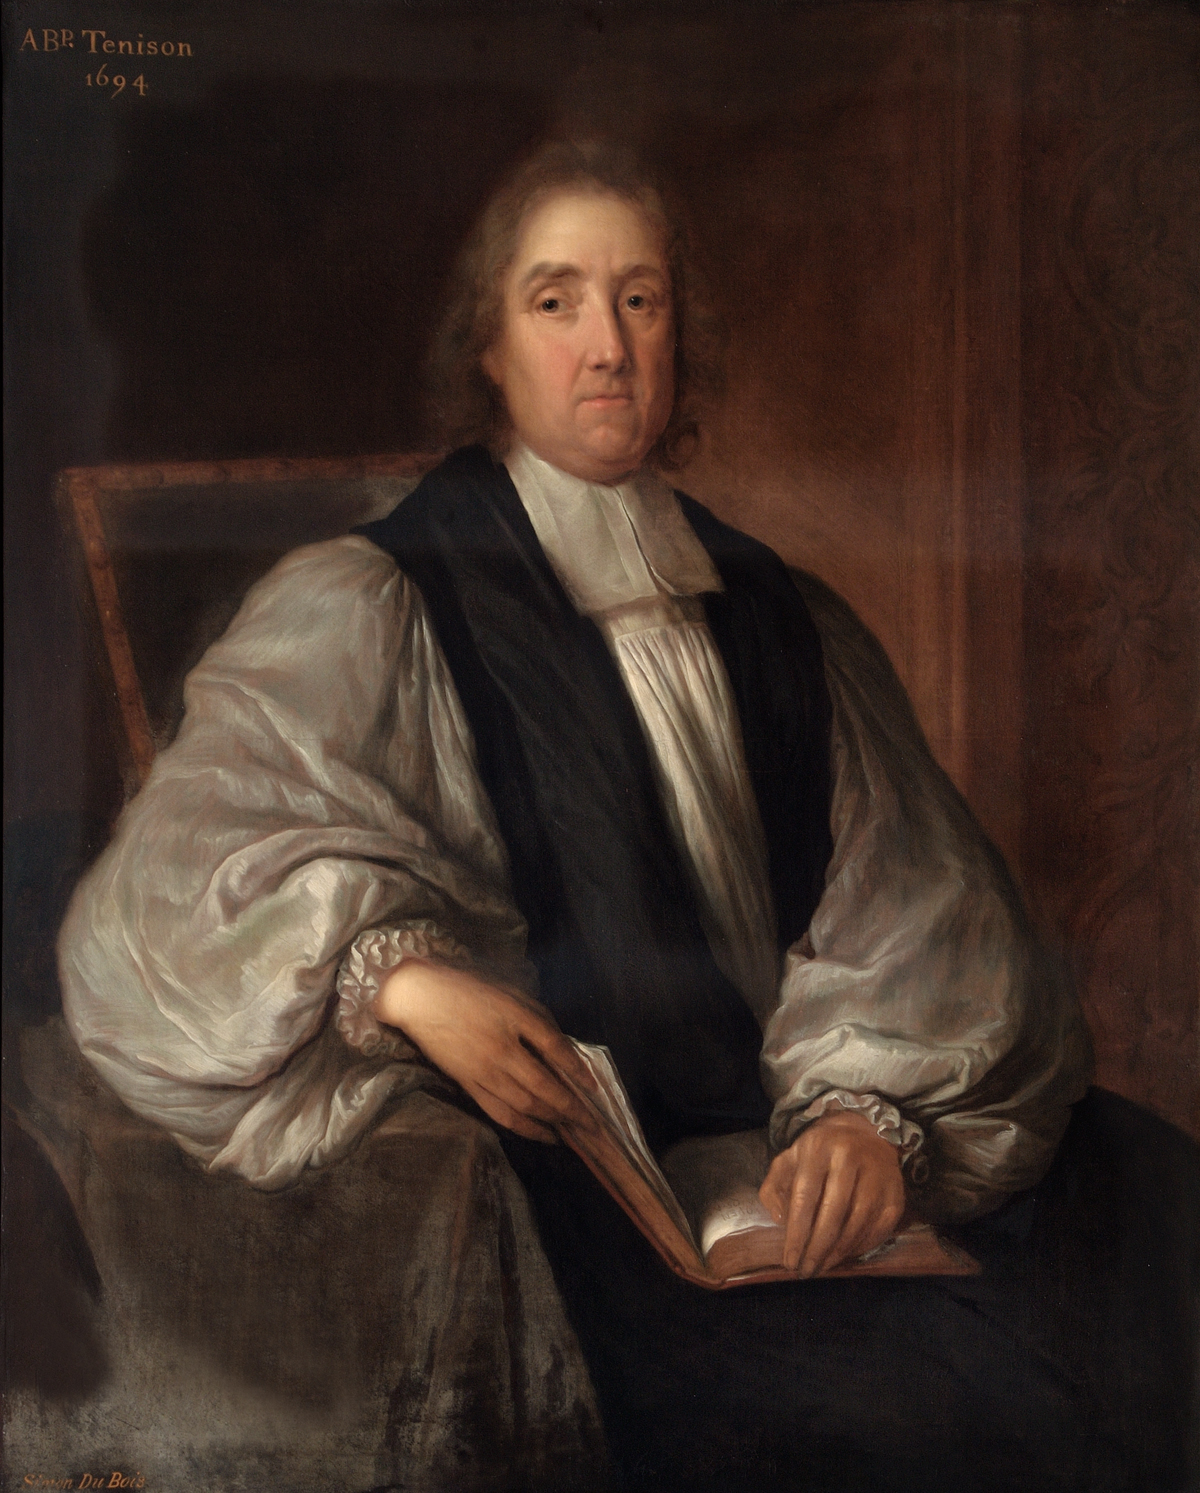 Portrait of Thomas Tenison Archbishop of Canterbury